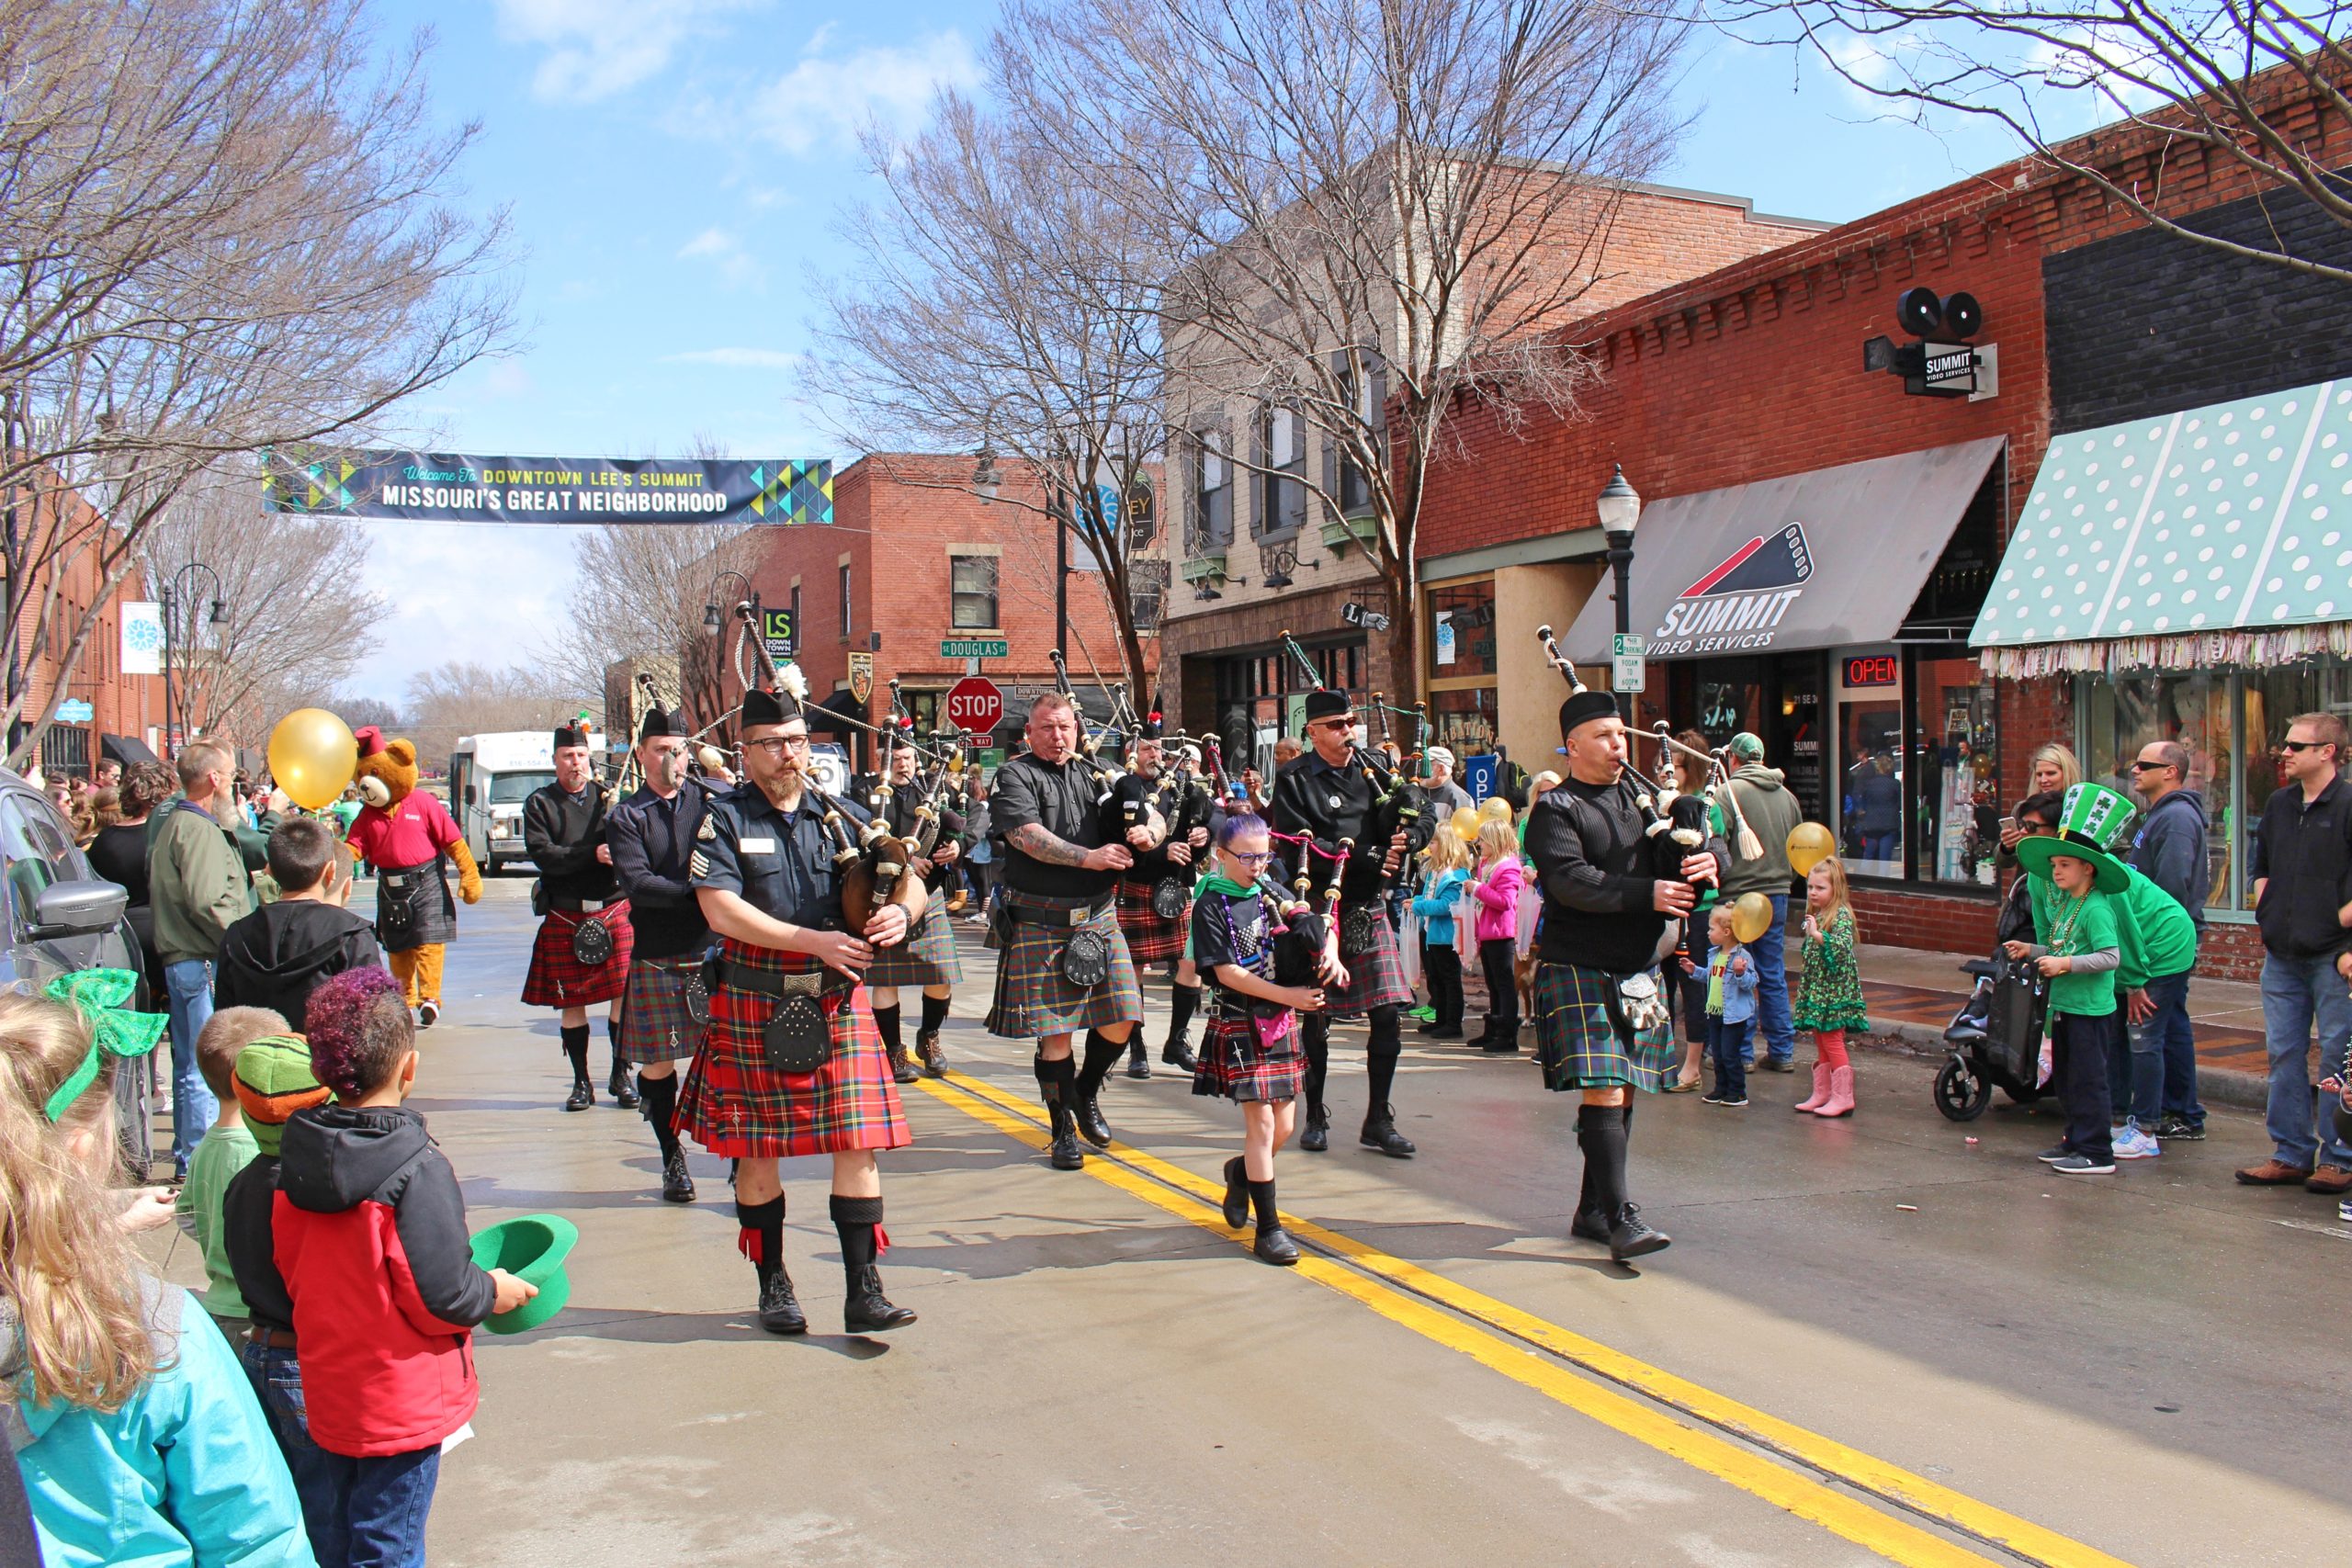 Emerald Isle Parade will float through Downtown Lee's Summit on March 12th  - Downtown Lee's Summit